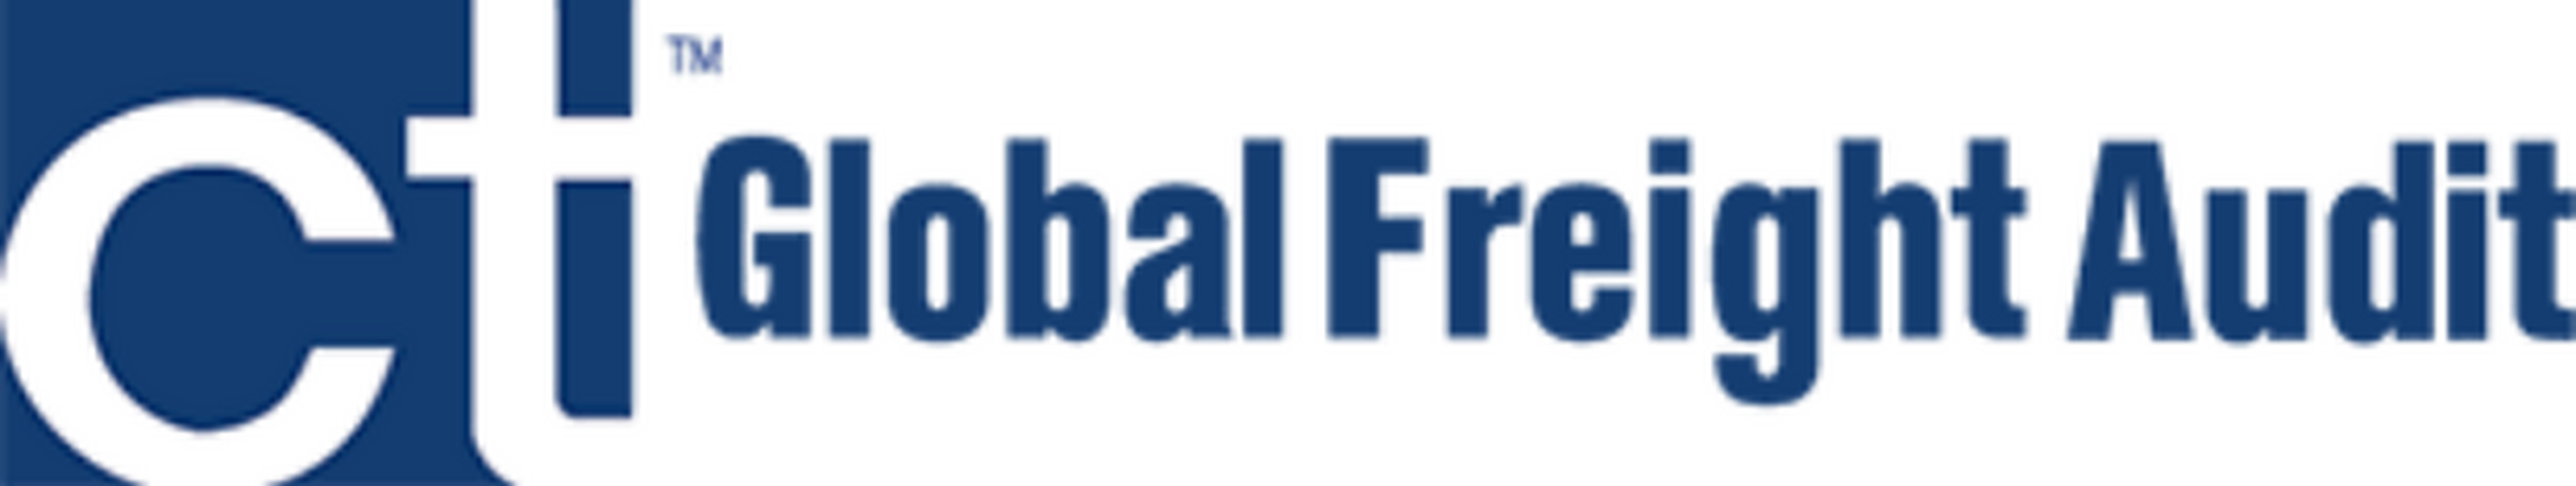 ct-global-freight-audit-logo